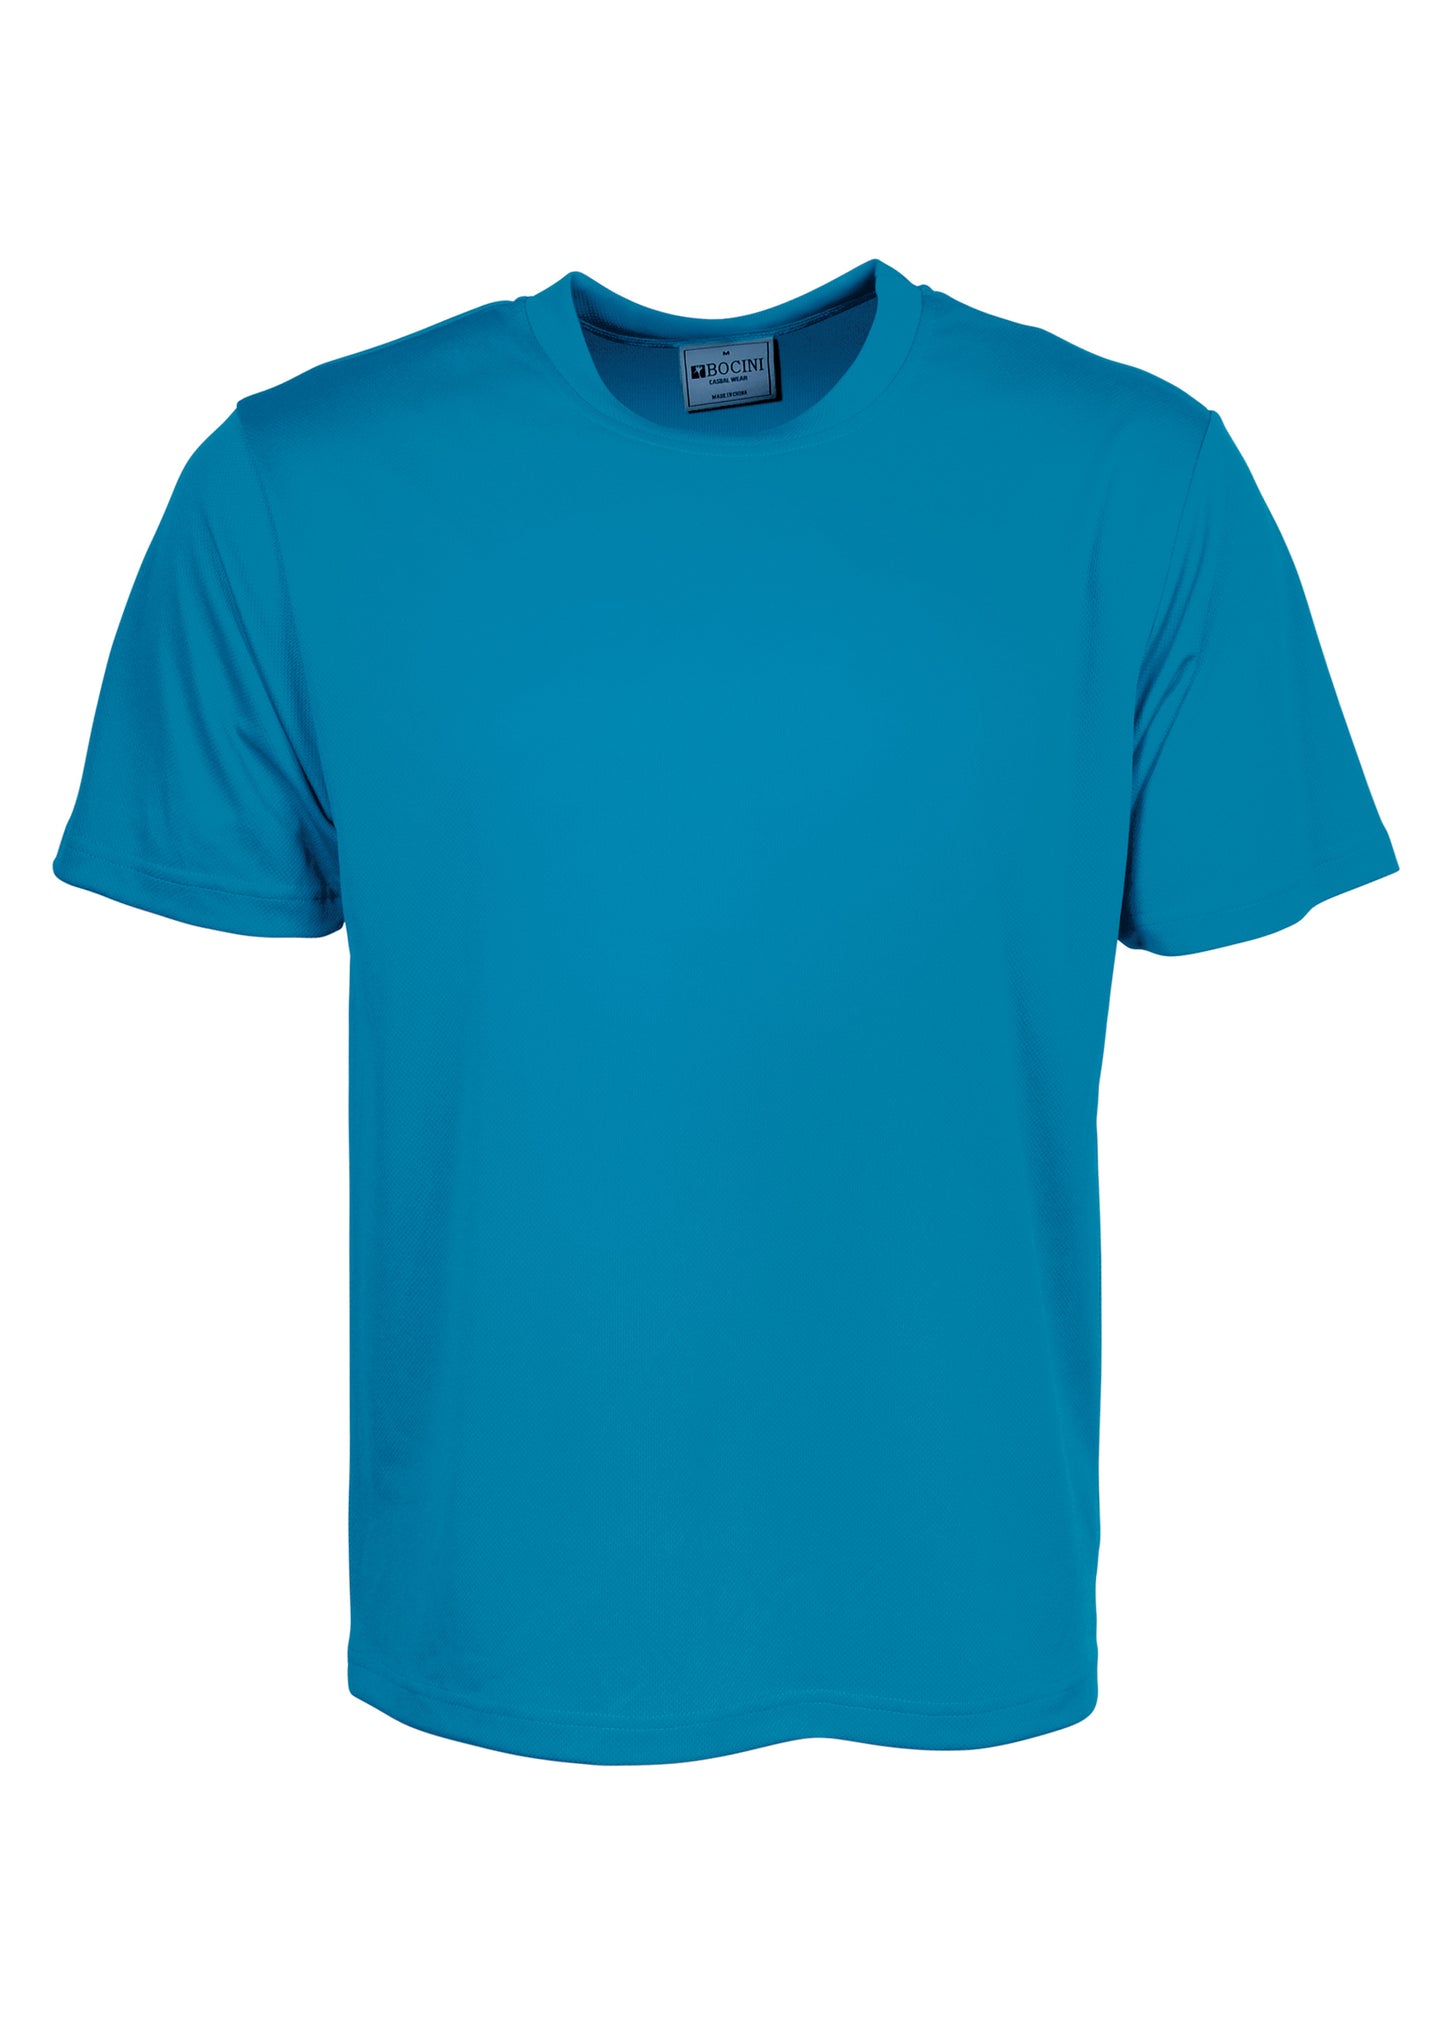 Bocini Unisex Adults Plain Breezeway Micromesh Tee Shirt